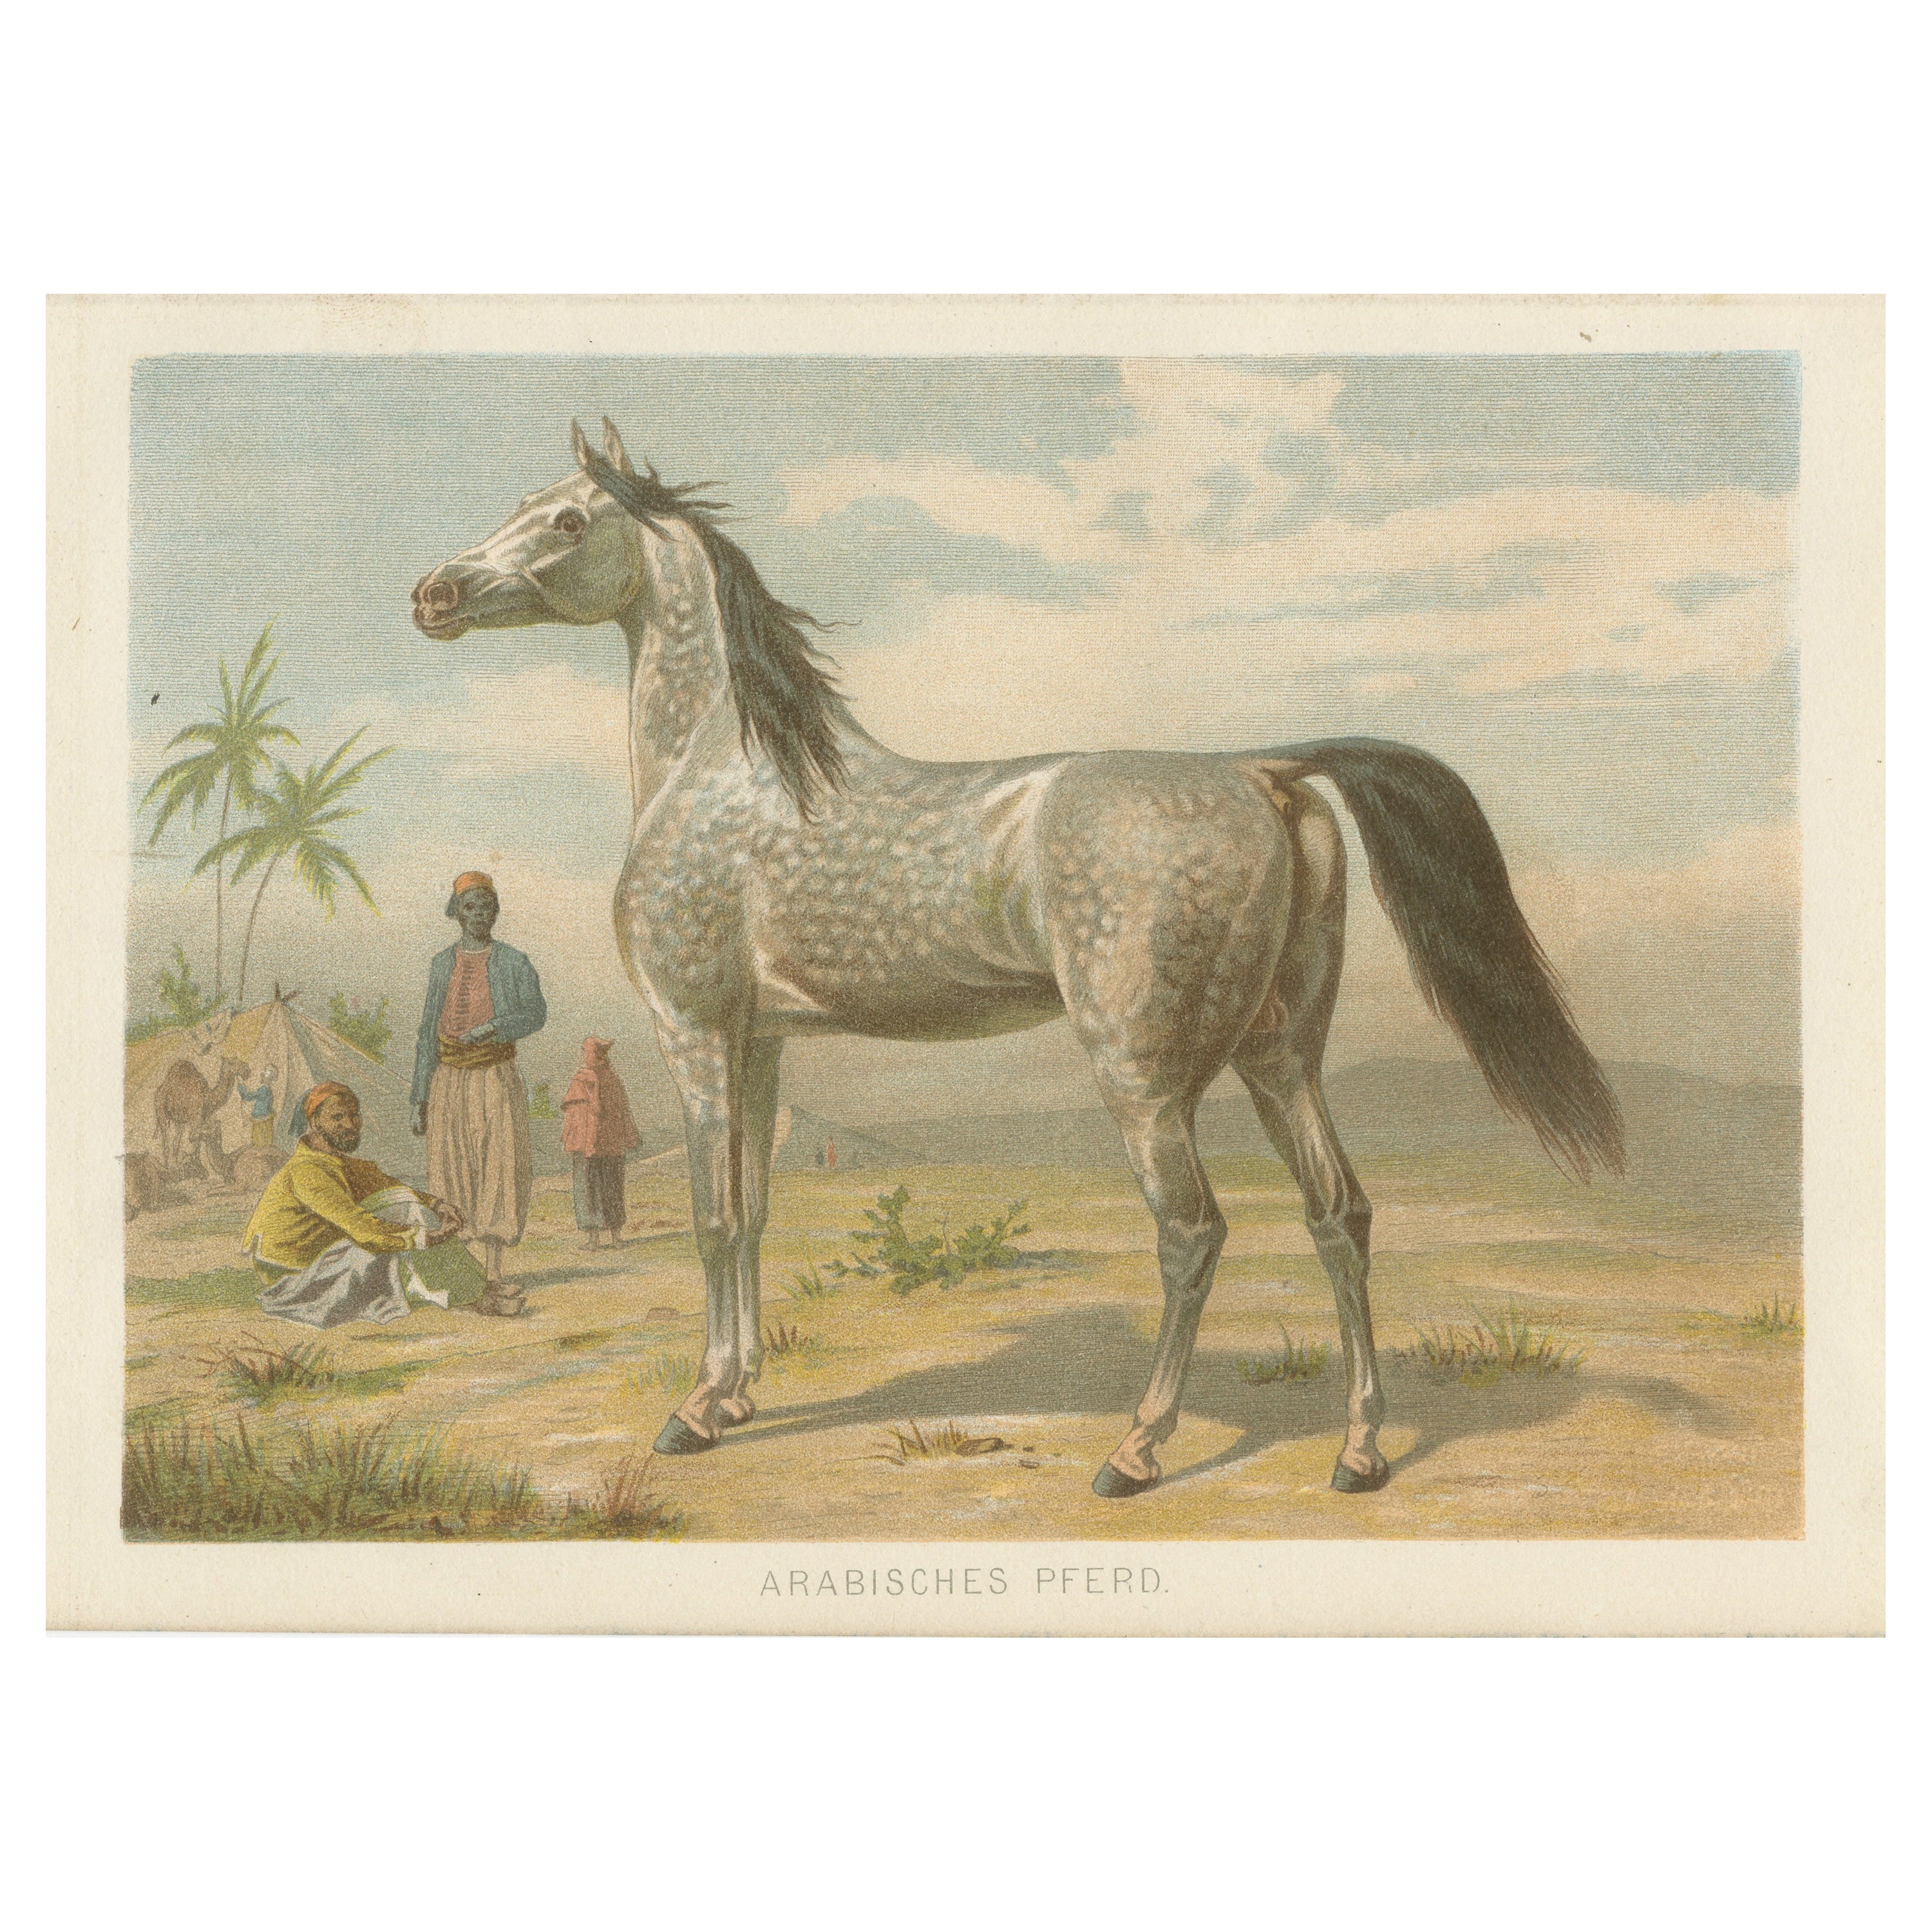 Chromolithograph of an Arabian Horse